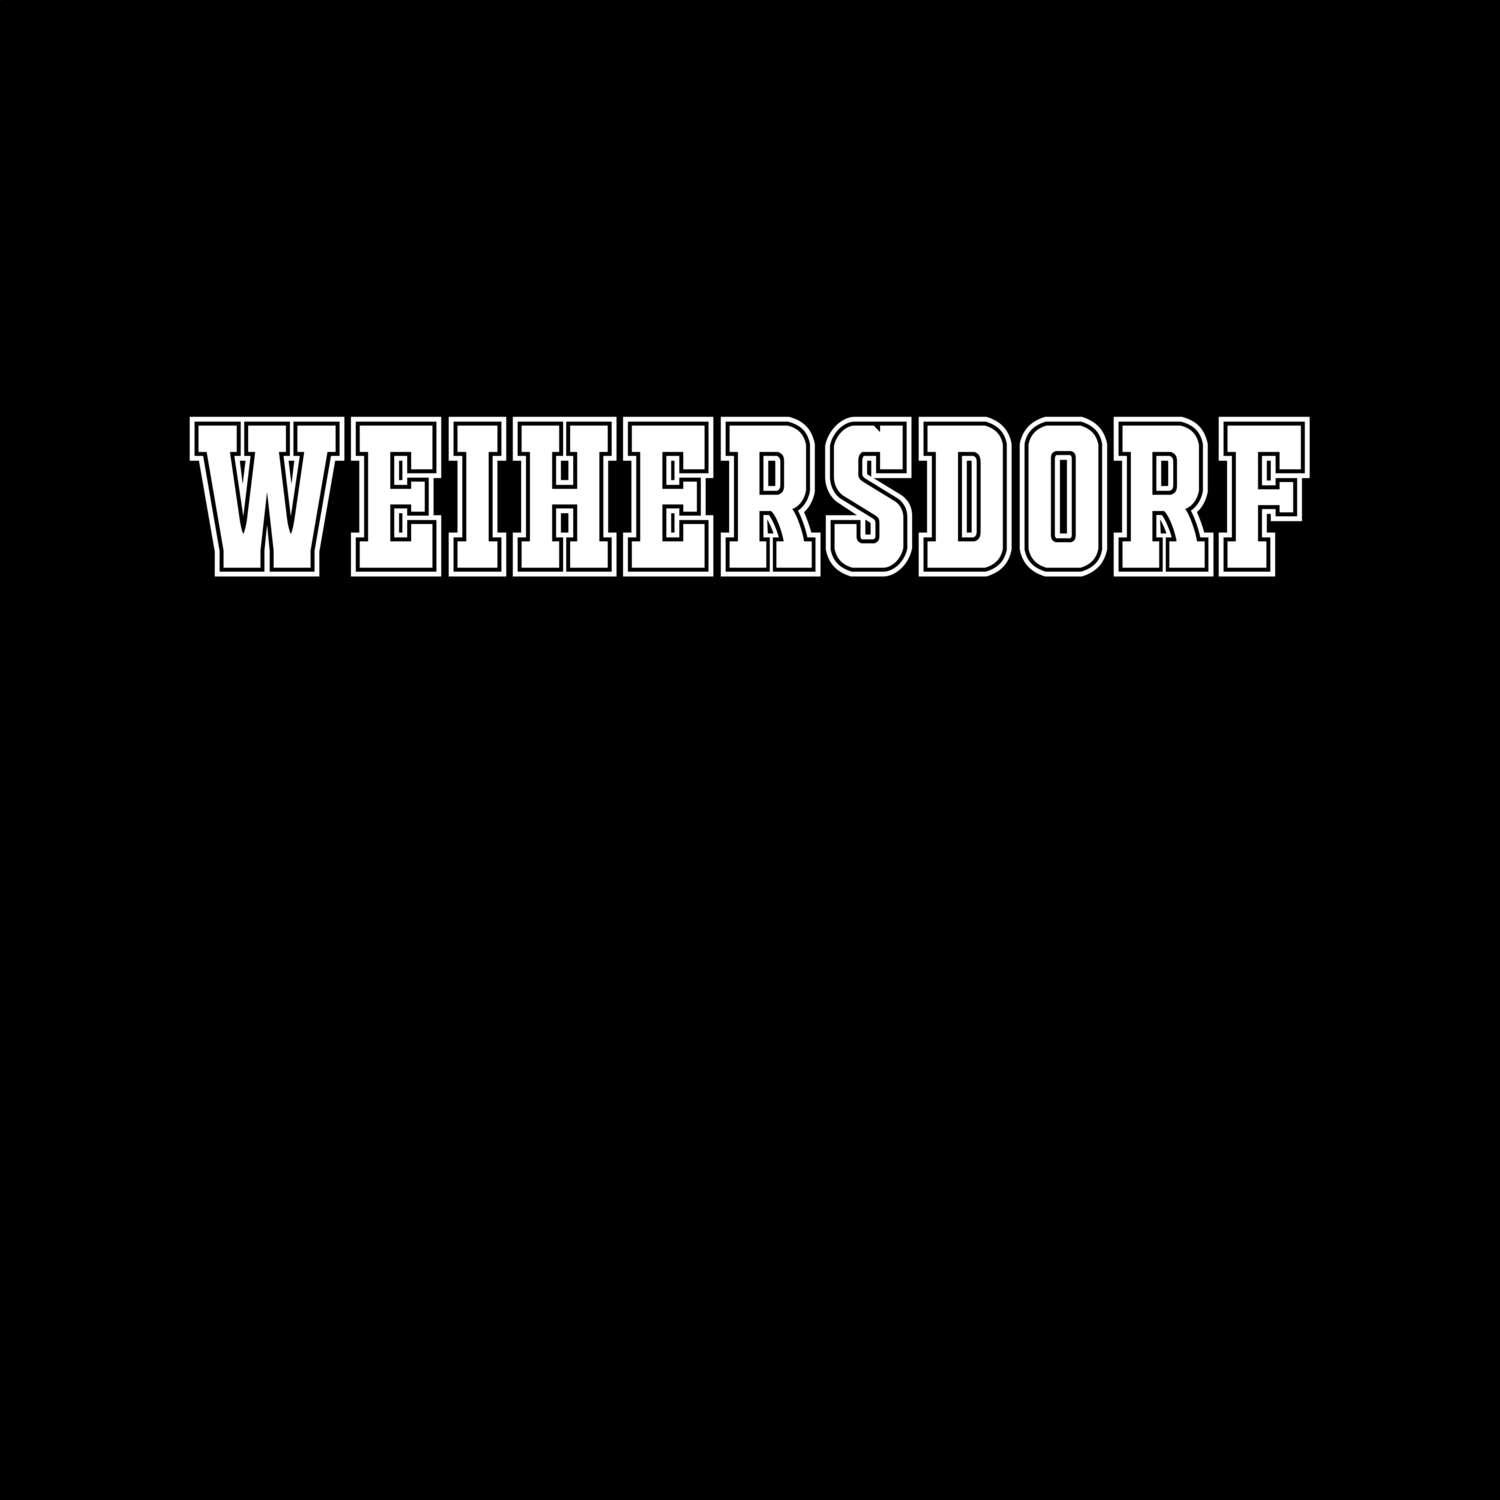 Weihersdorf T-Shirt »Classic«